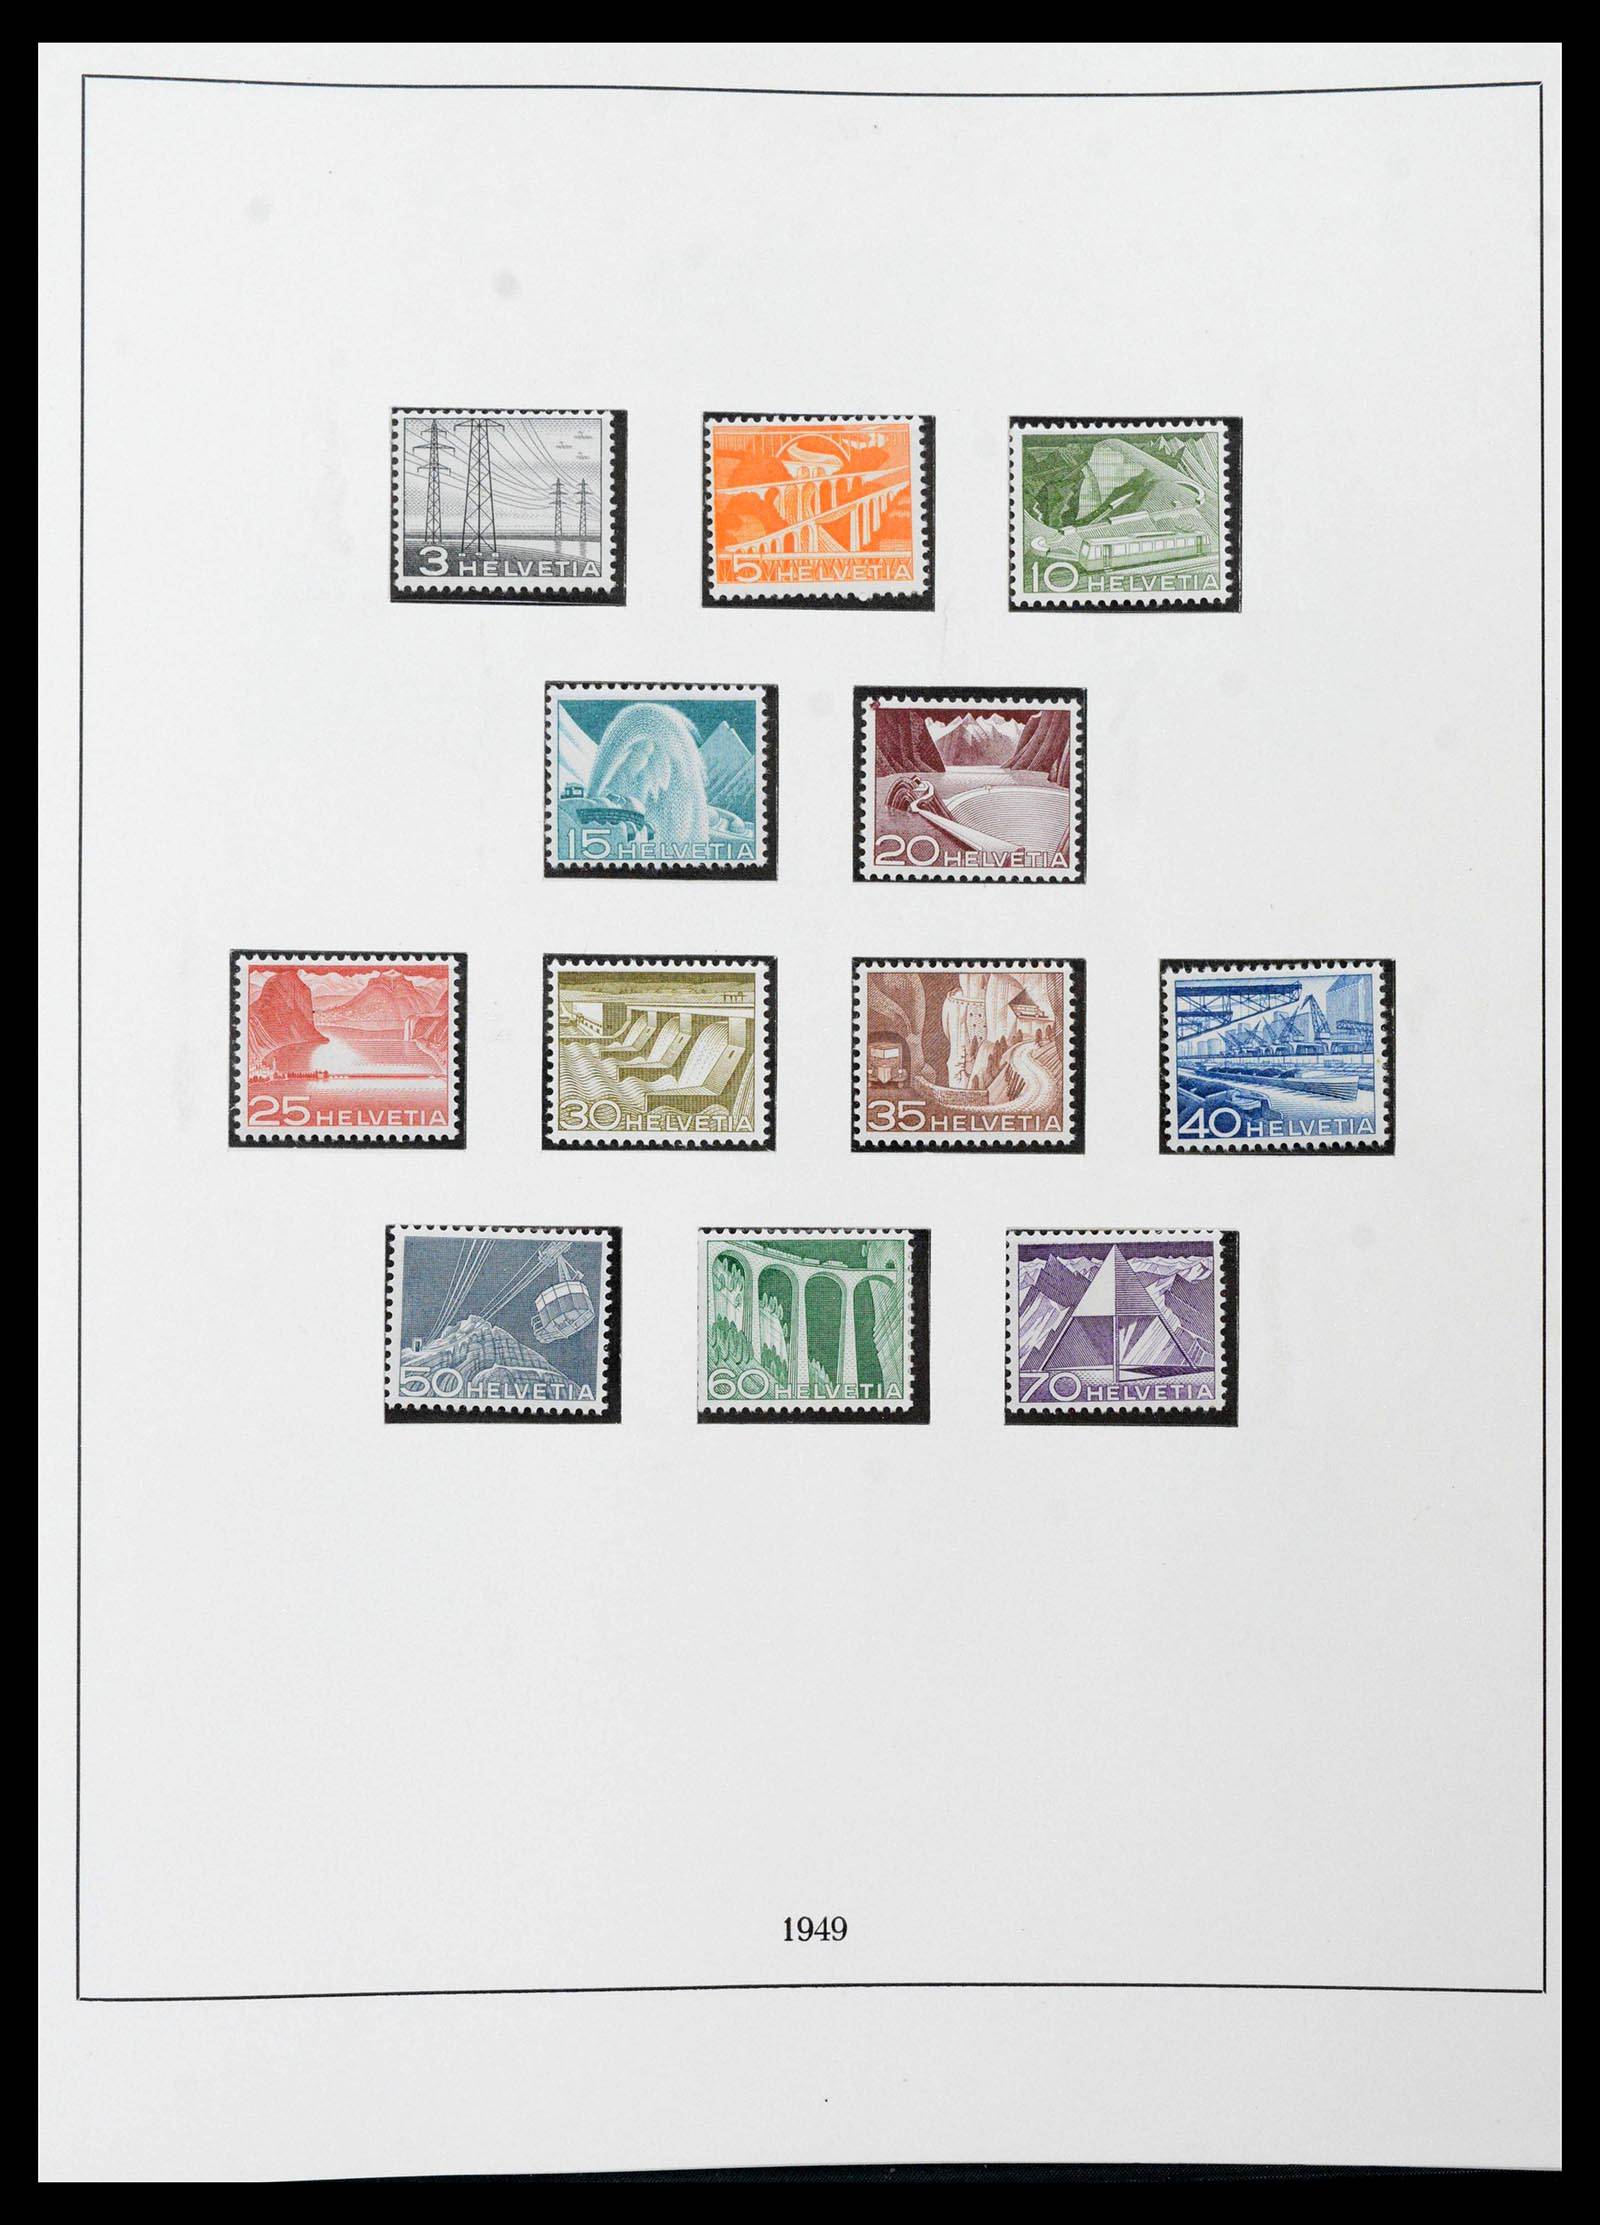 39235 0045 - Stamp collection 39235 Switzerland 1843-1960.